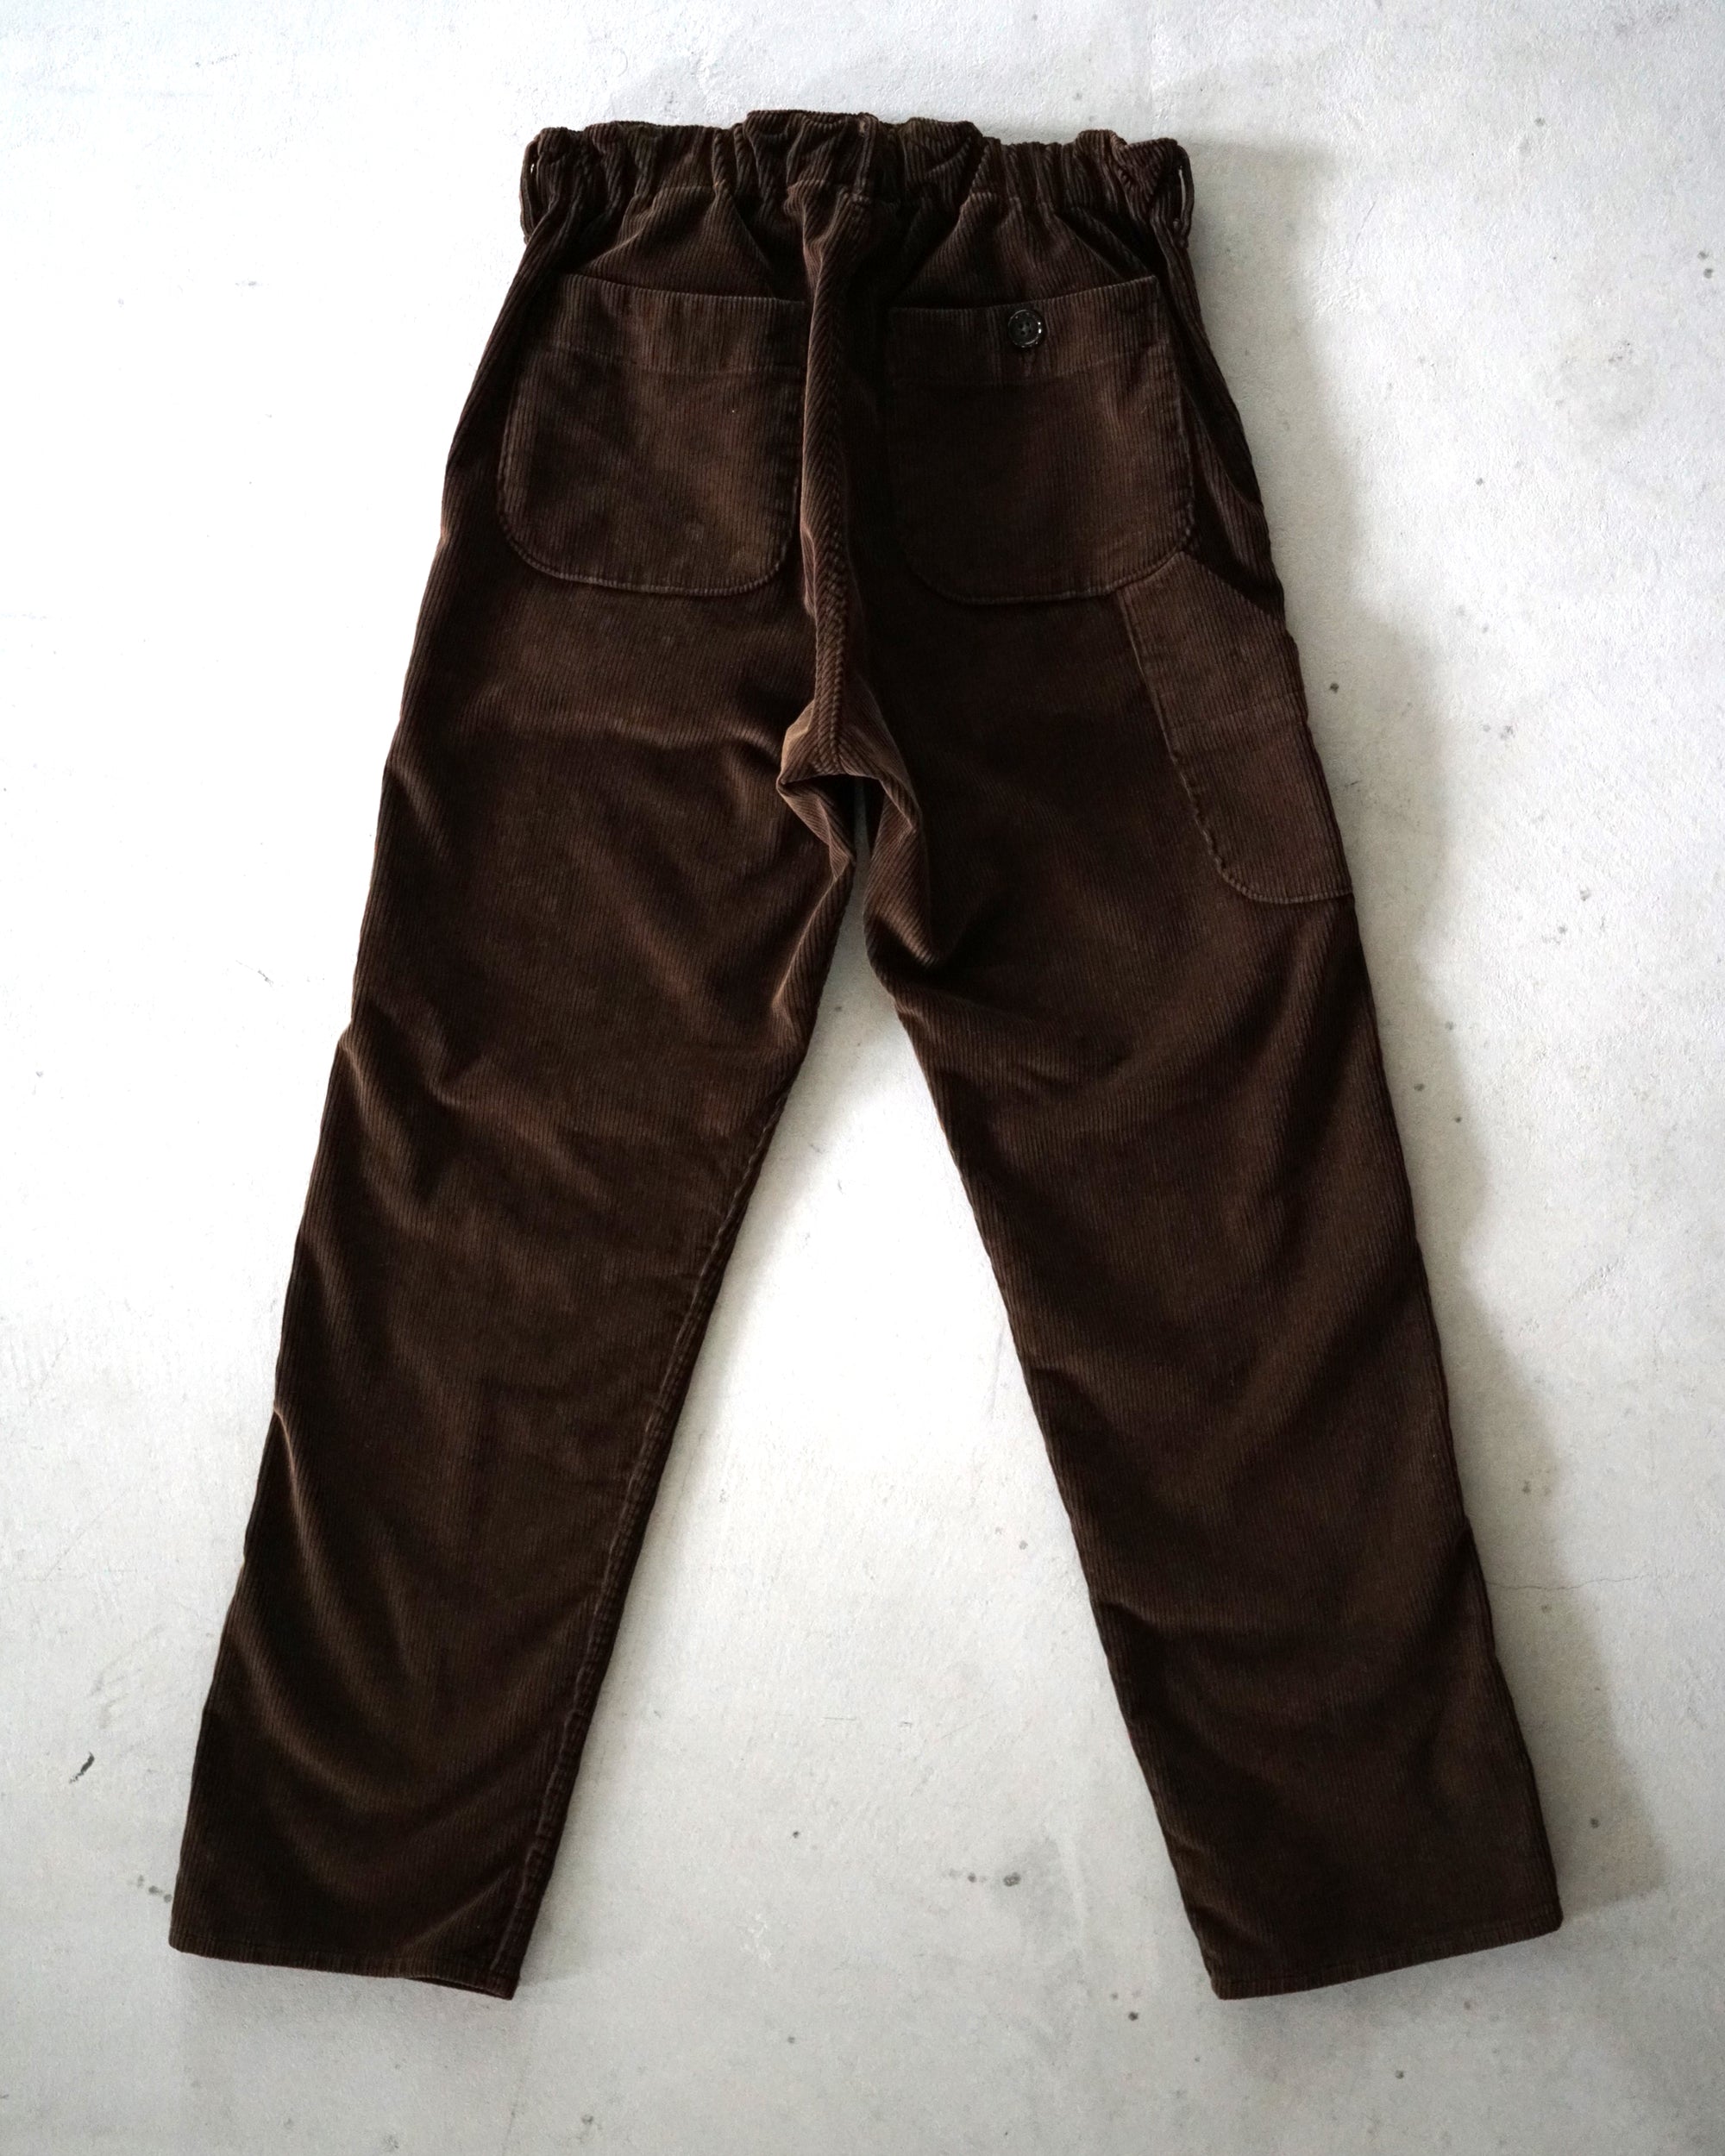 French Work Pants - Dark Brown Corduroy